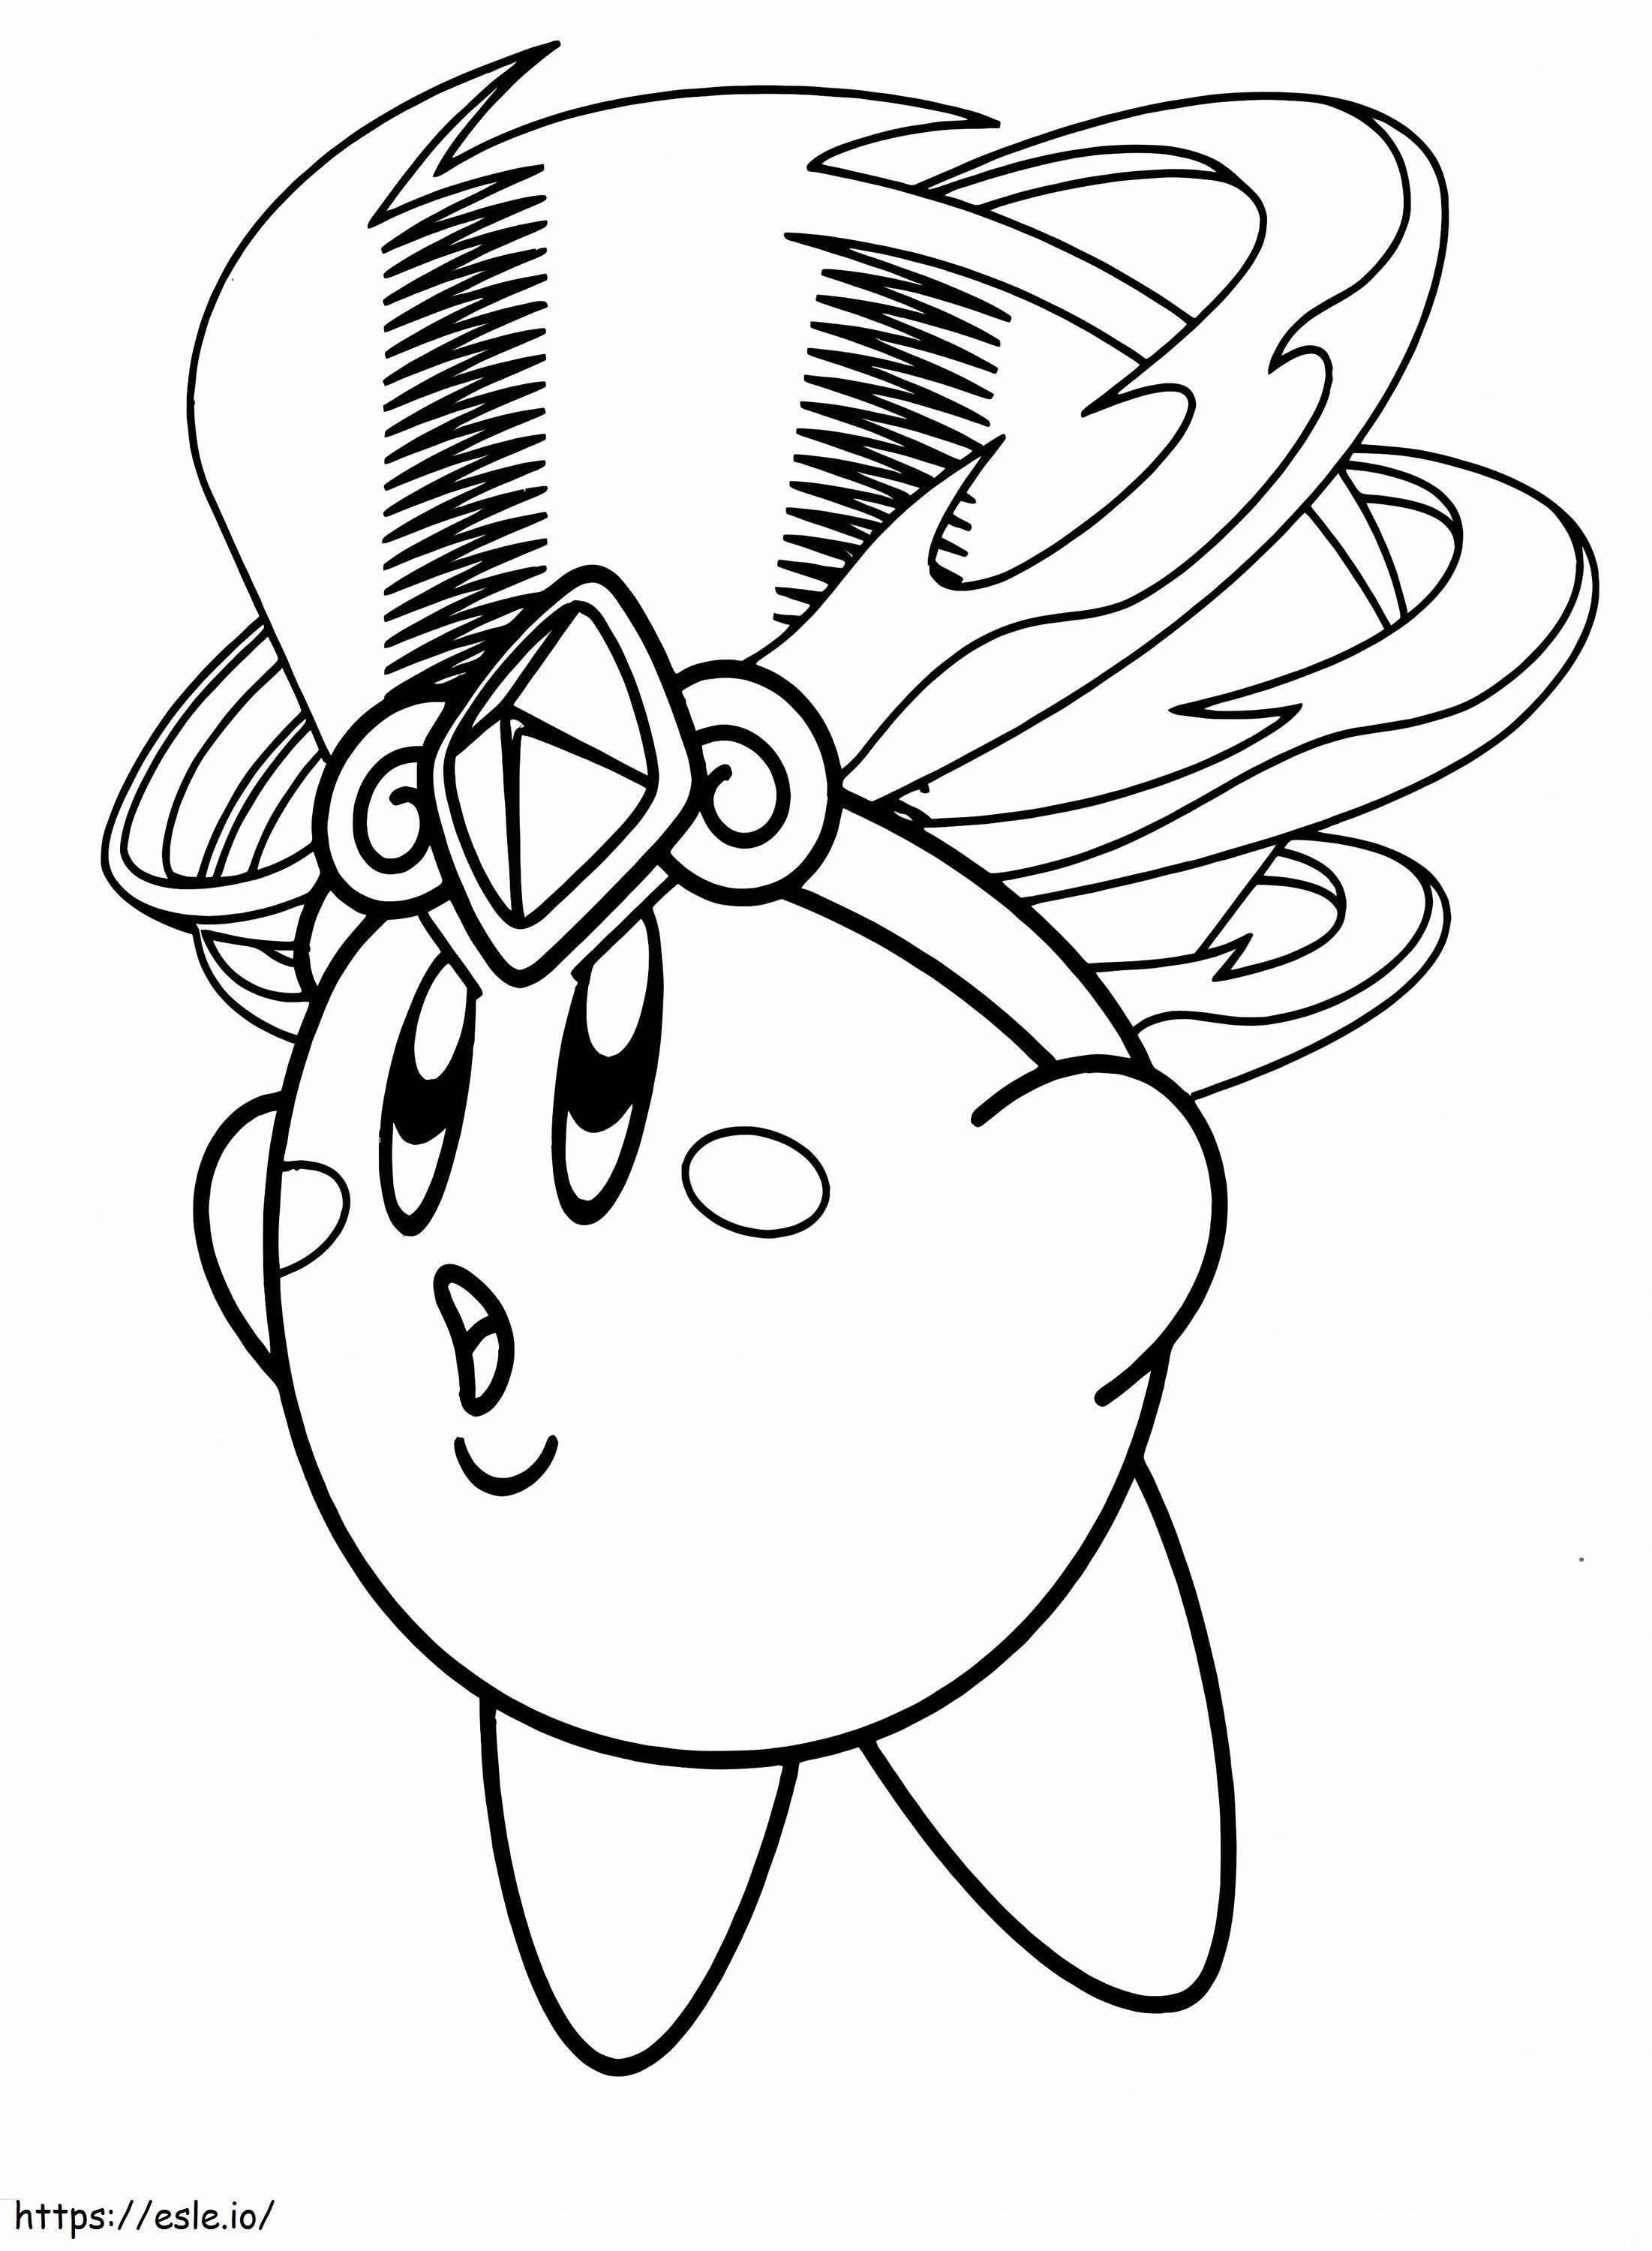 Coloriage Kirby incroyable à imprimer dessin